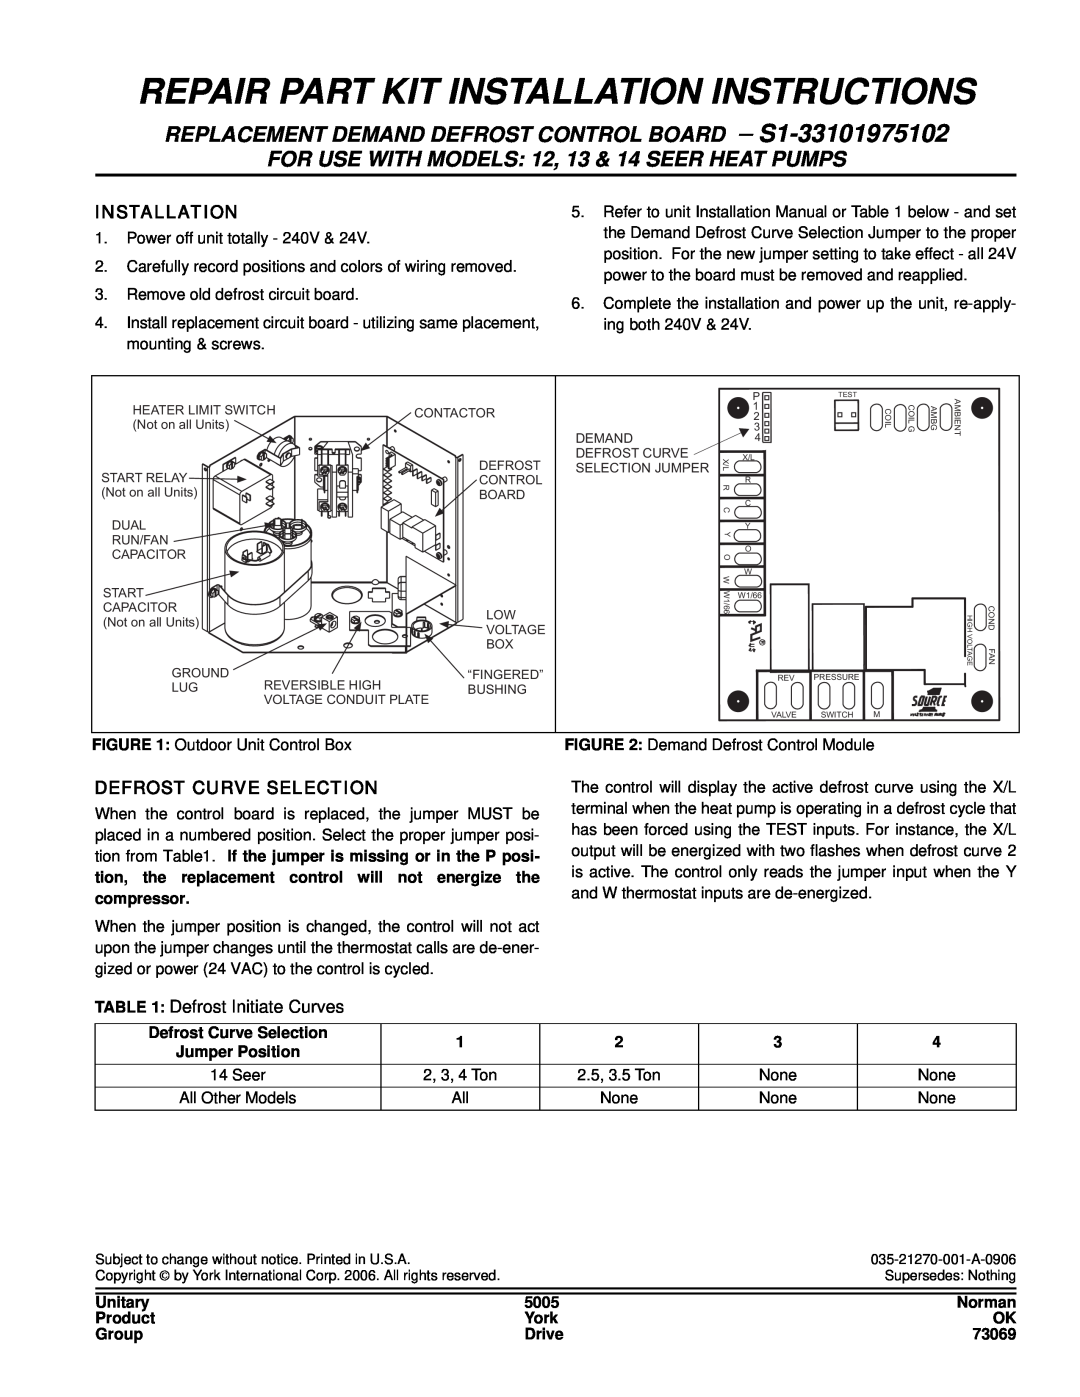 York S1-33101975102 installation instructions Repair Part Kit Installation Instructions, Defrost Curve Selection, Unitary 